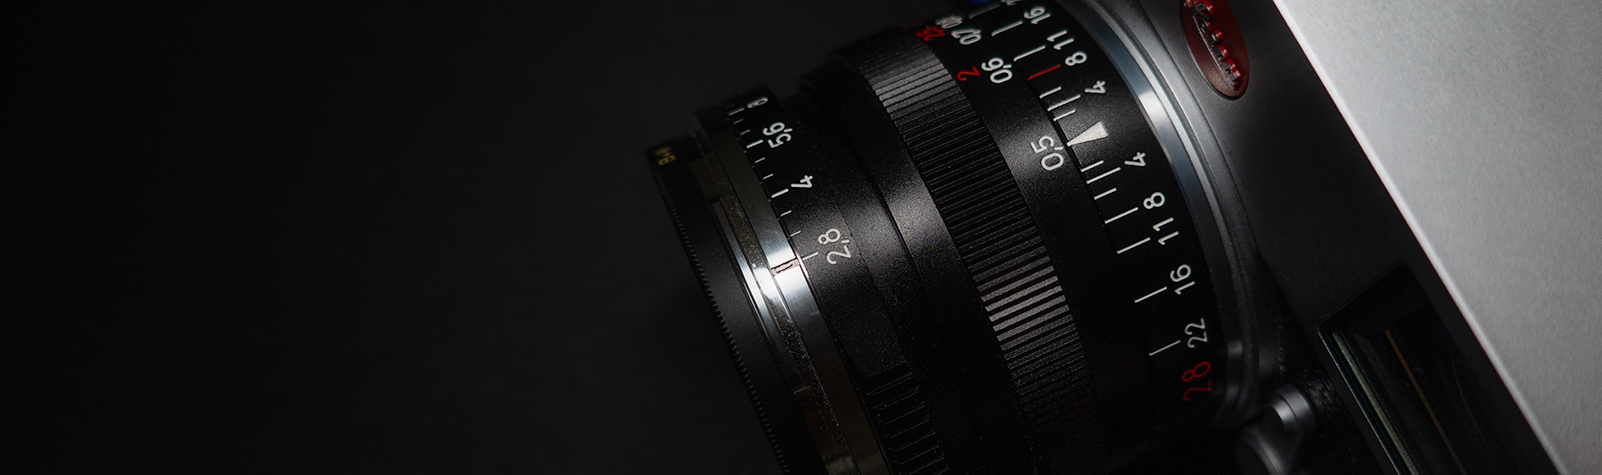 The annoyance of close focusing (0.5m) lenses on Leica rangefinder cameras